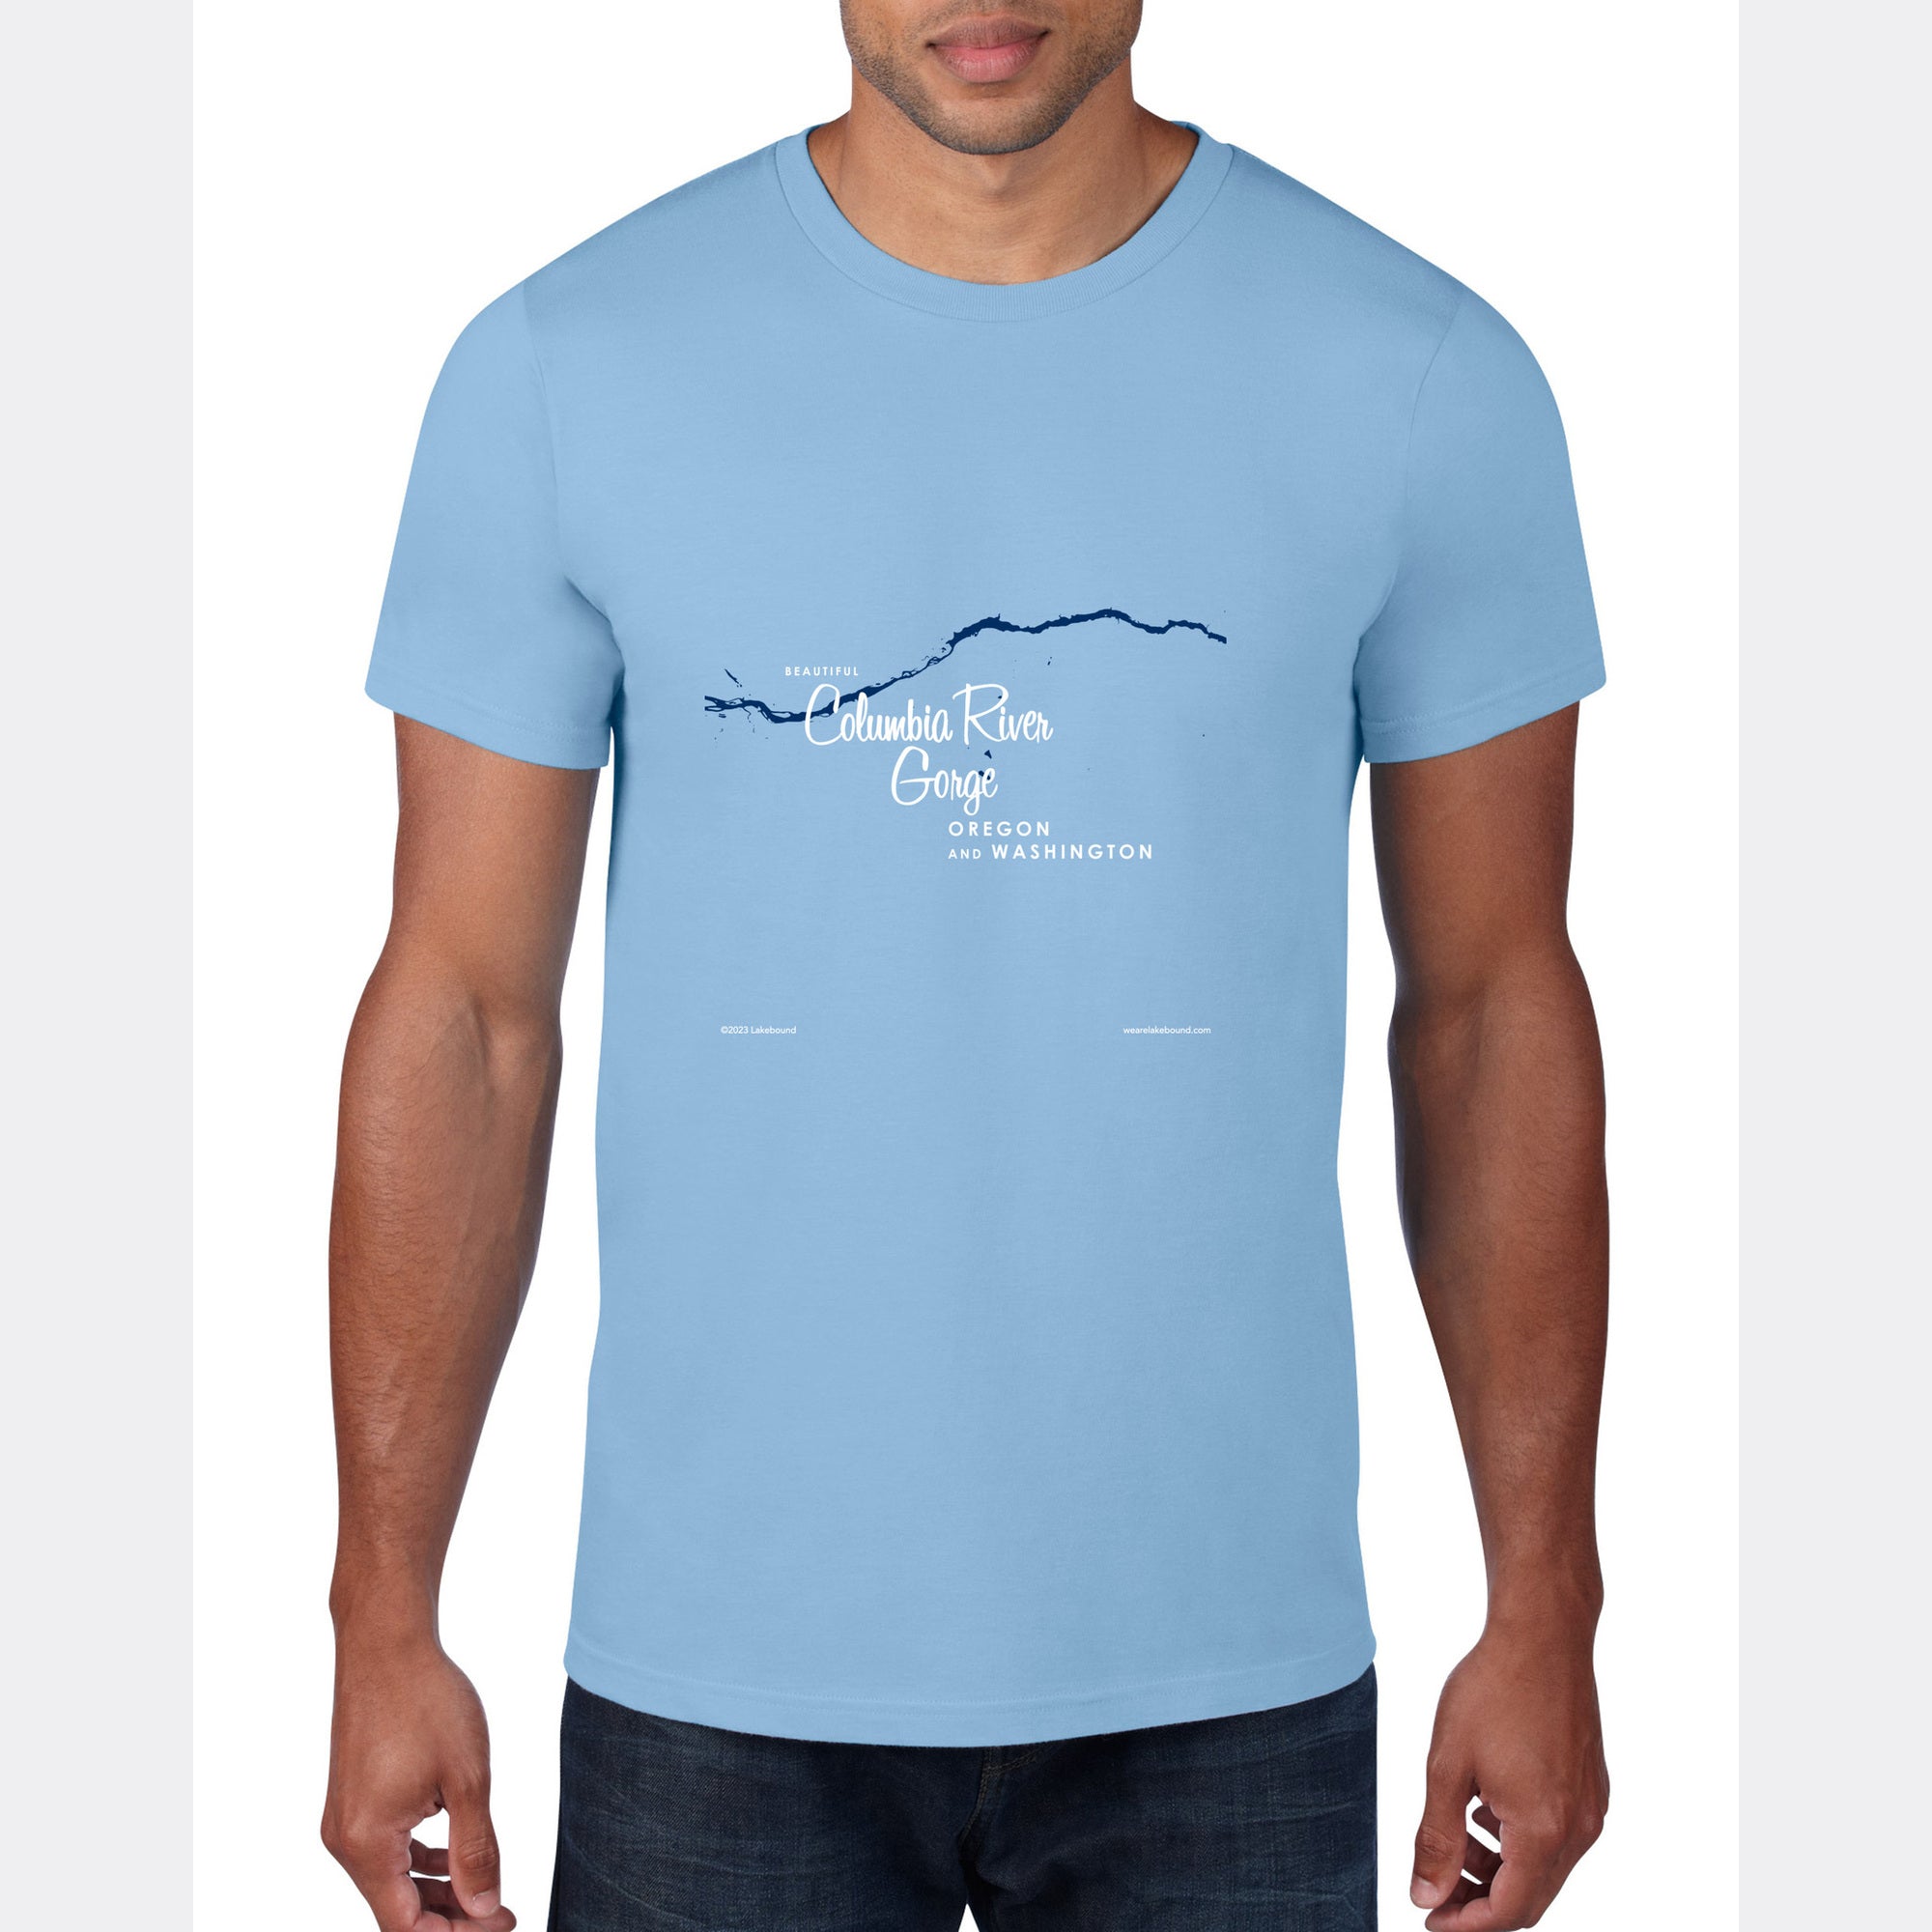 Columbia River Gorge OR Washington, T-Shirt